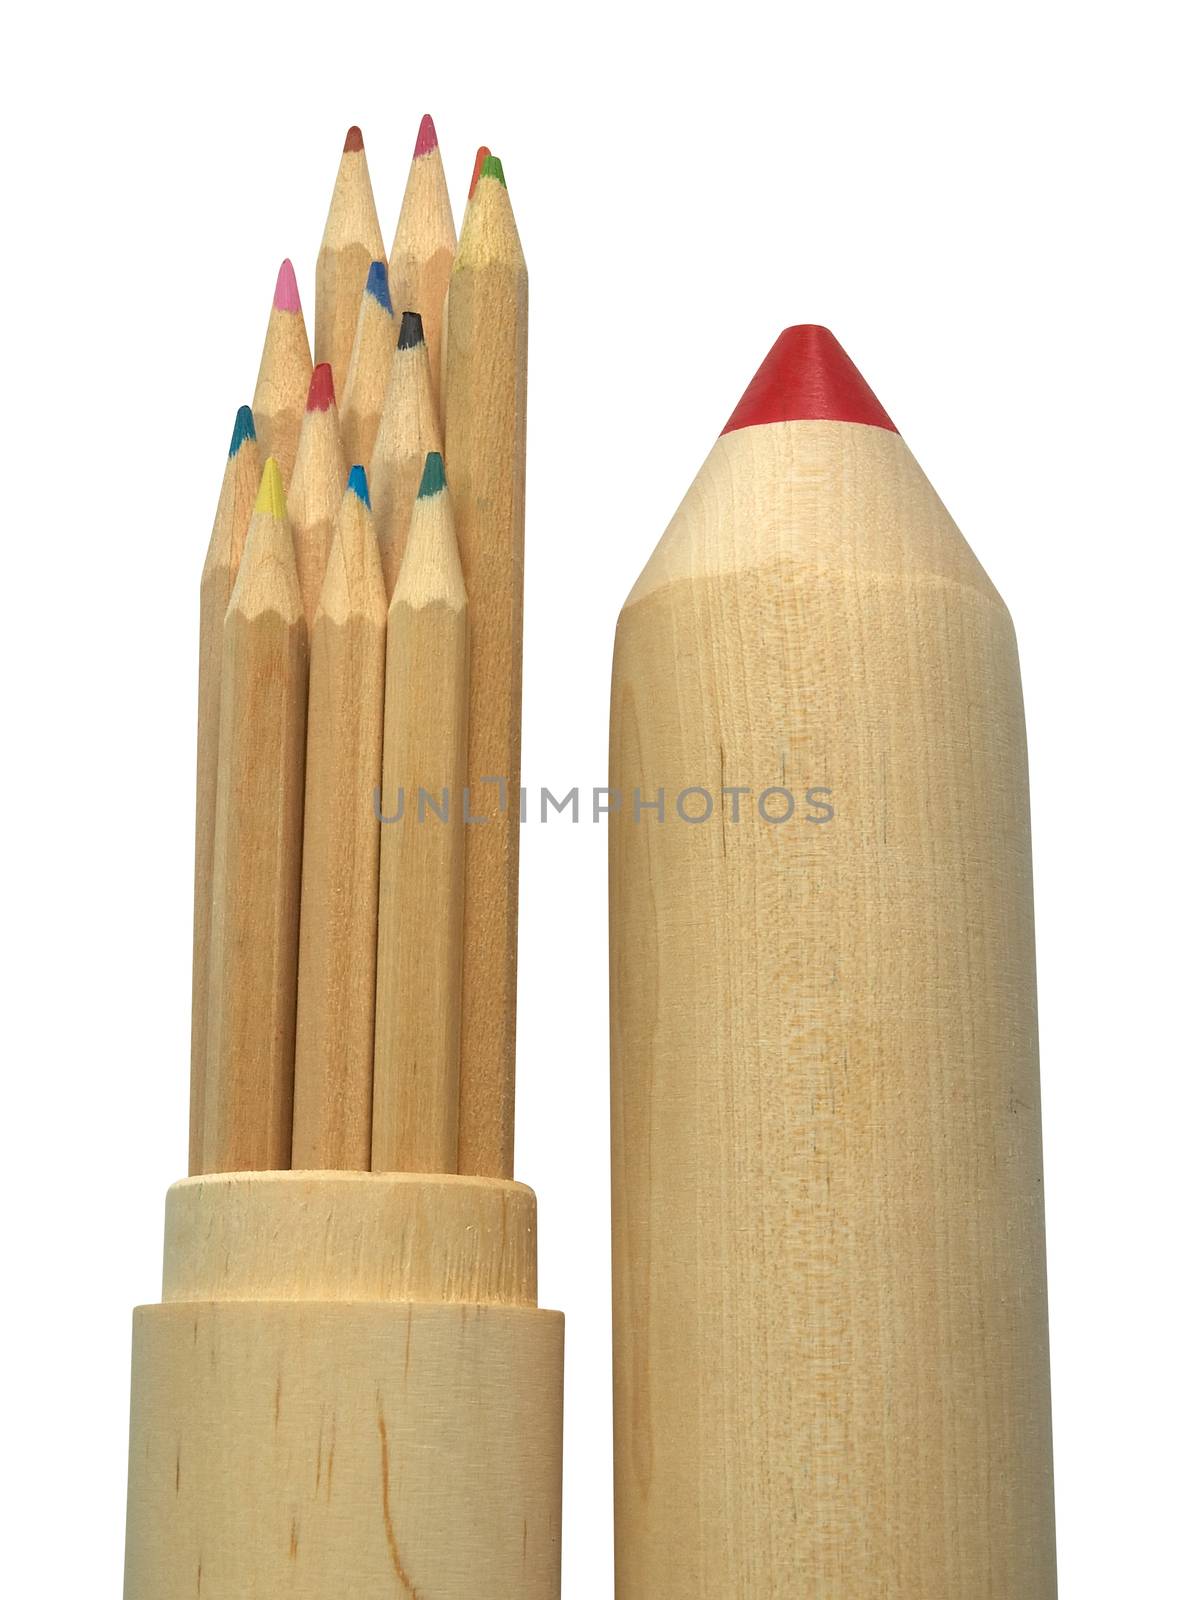 pencil-case and pencils by Venakr